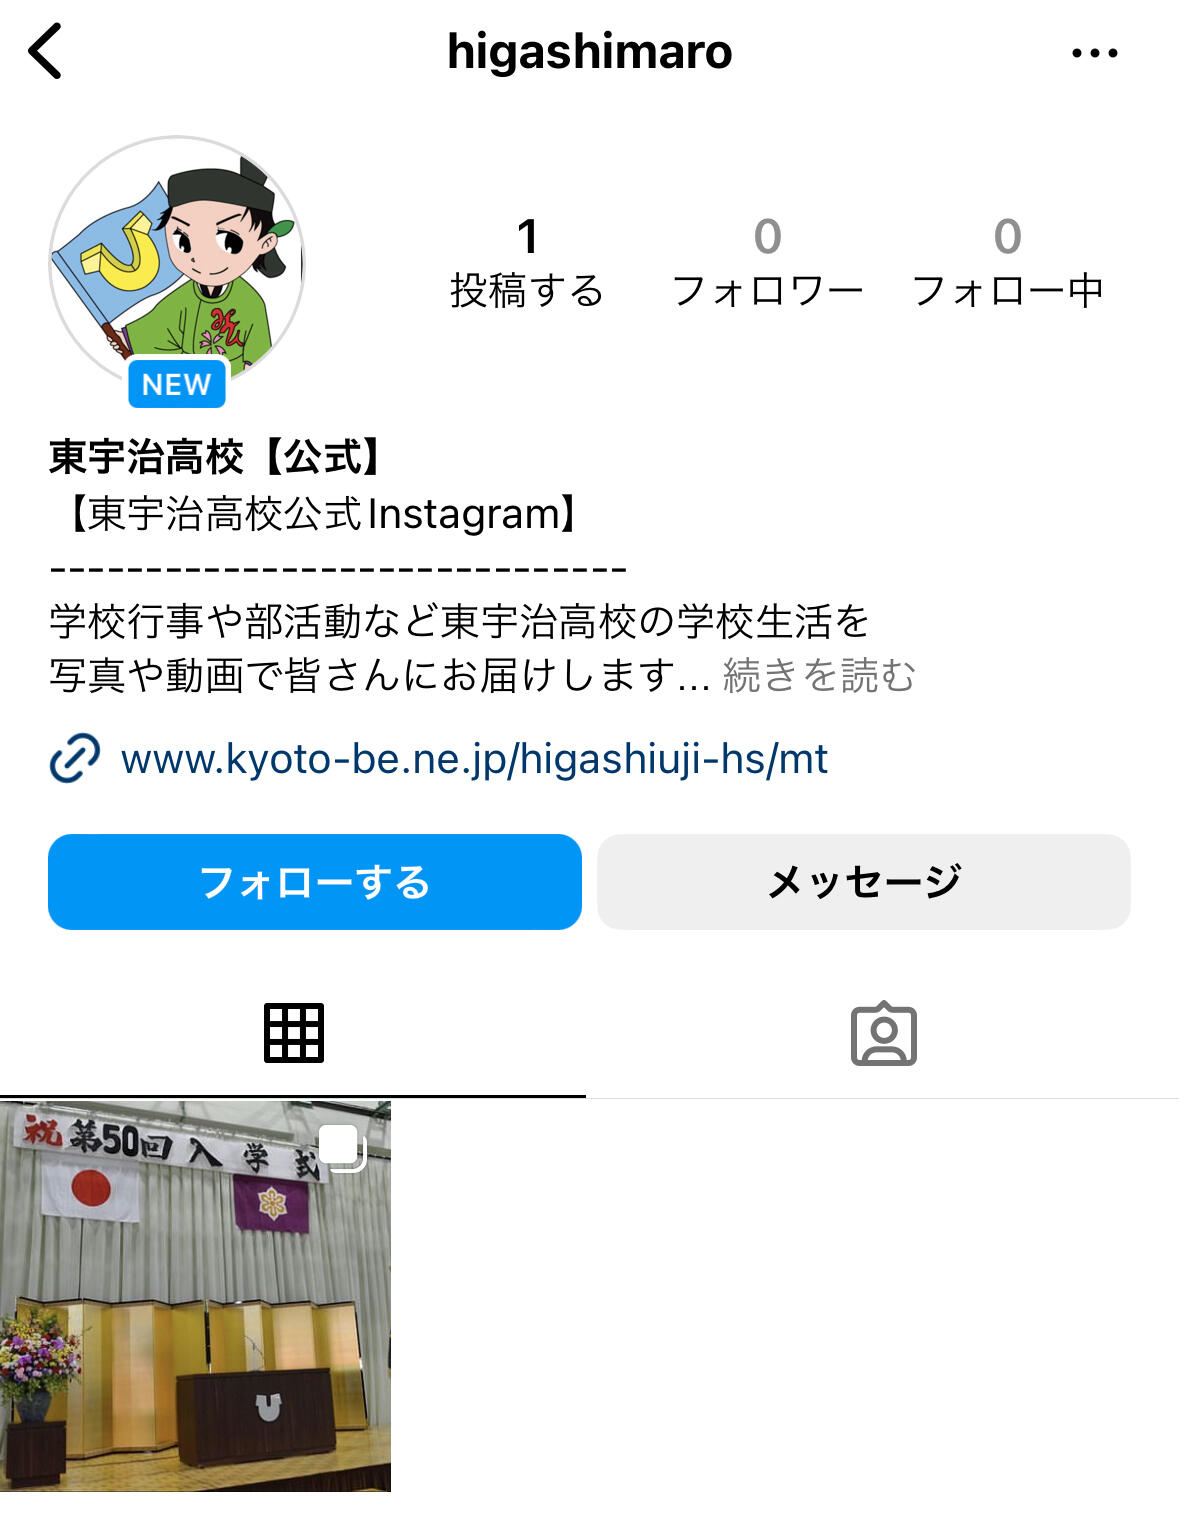 https://www.kyoto-be.ne.jp/higashiuji-hs/mt/topics/images/IMG_A76BE57DD8A5-1.jpeg